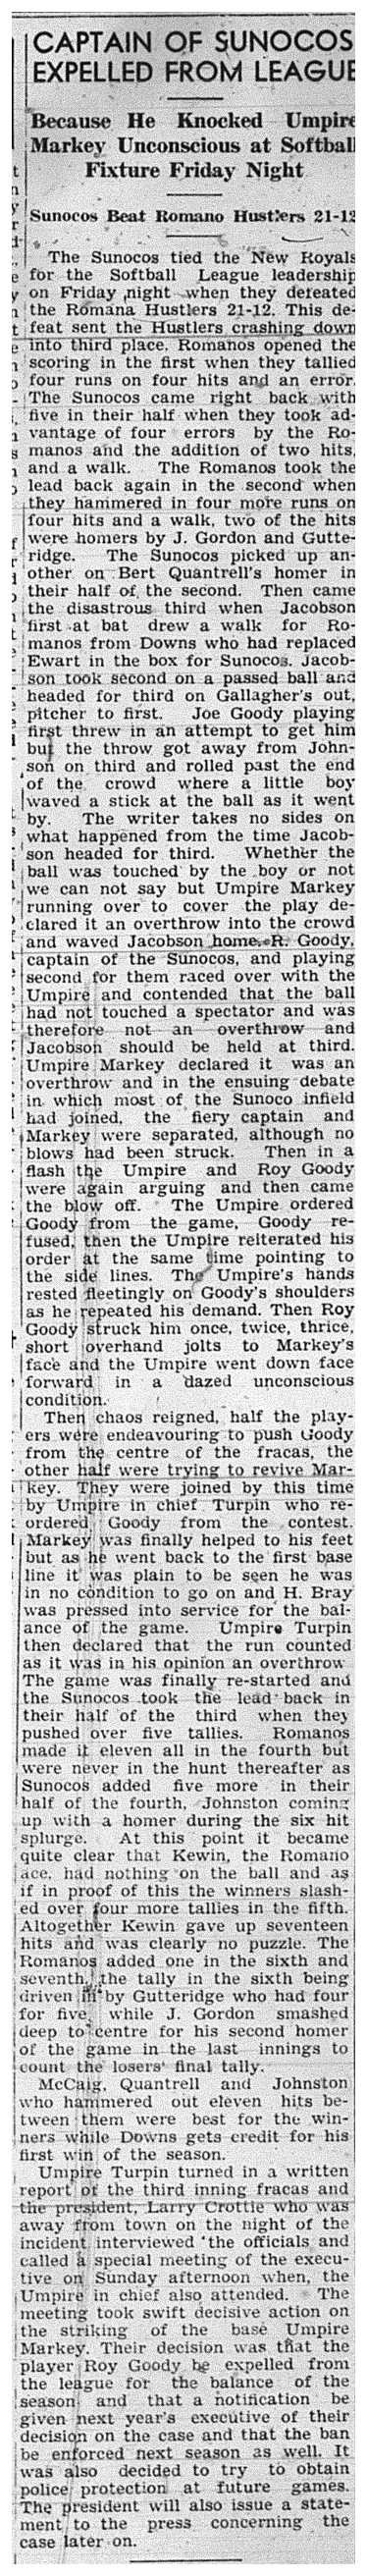 1939-06-22 Softball -Mens League Sunocos Captain Expelled from League